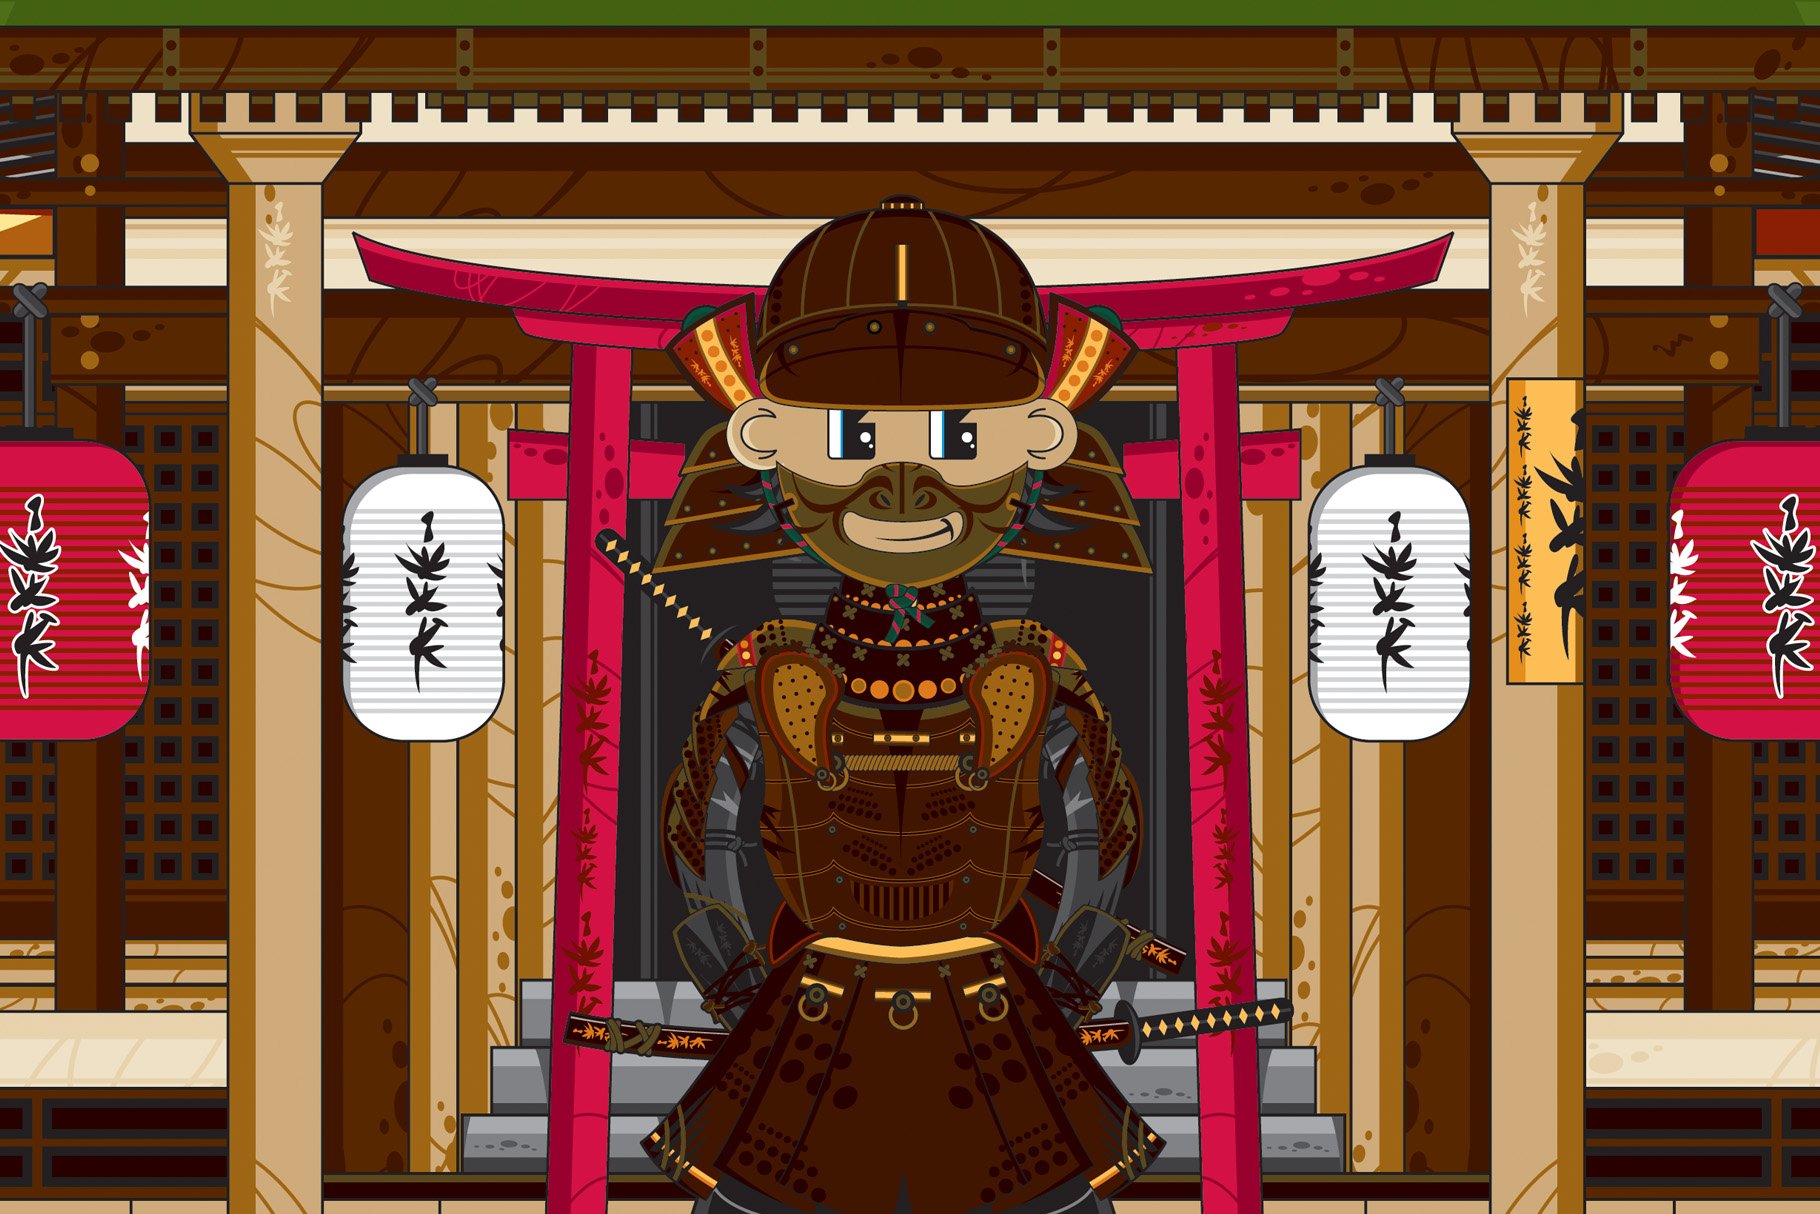 Fierce Samurai Warrior at Temple preview image.